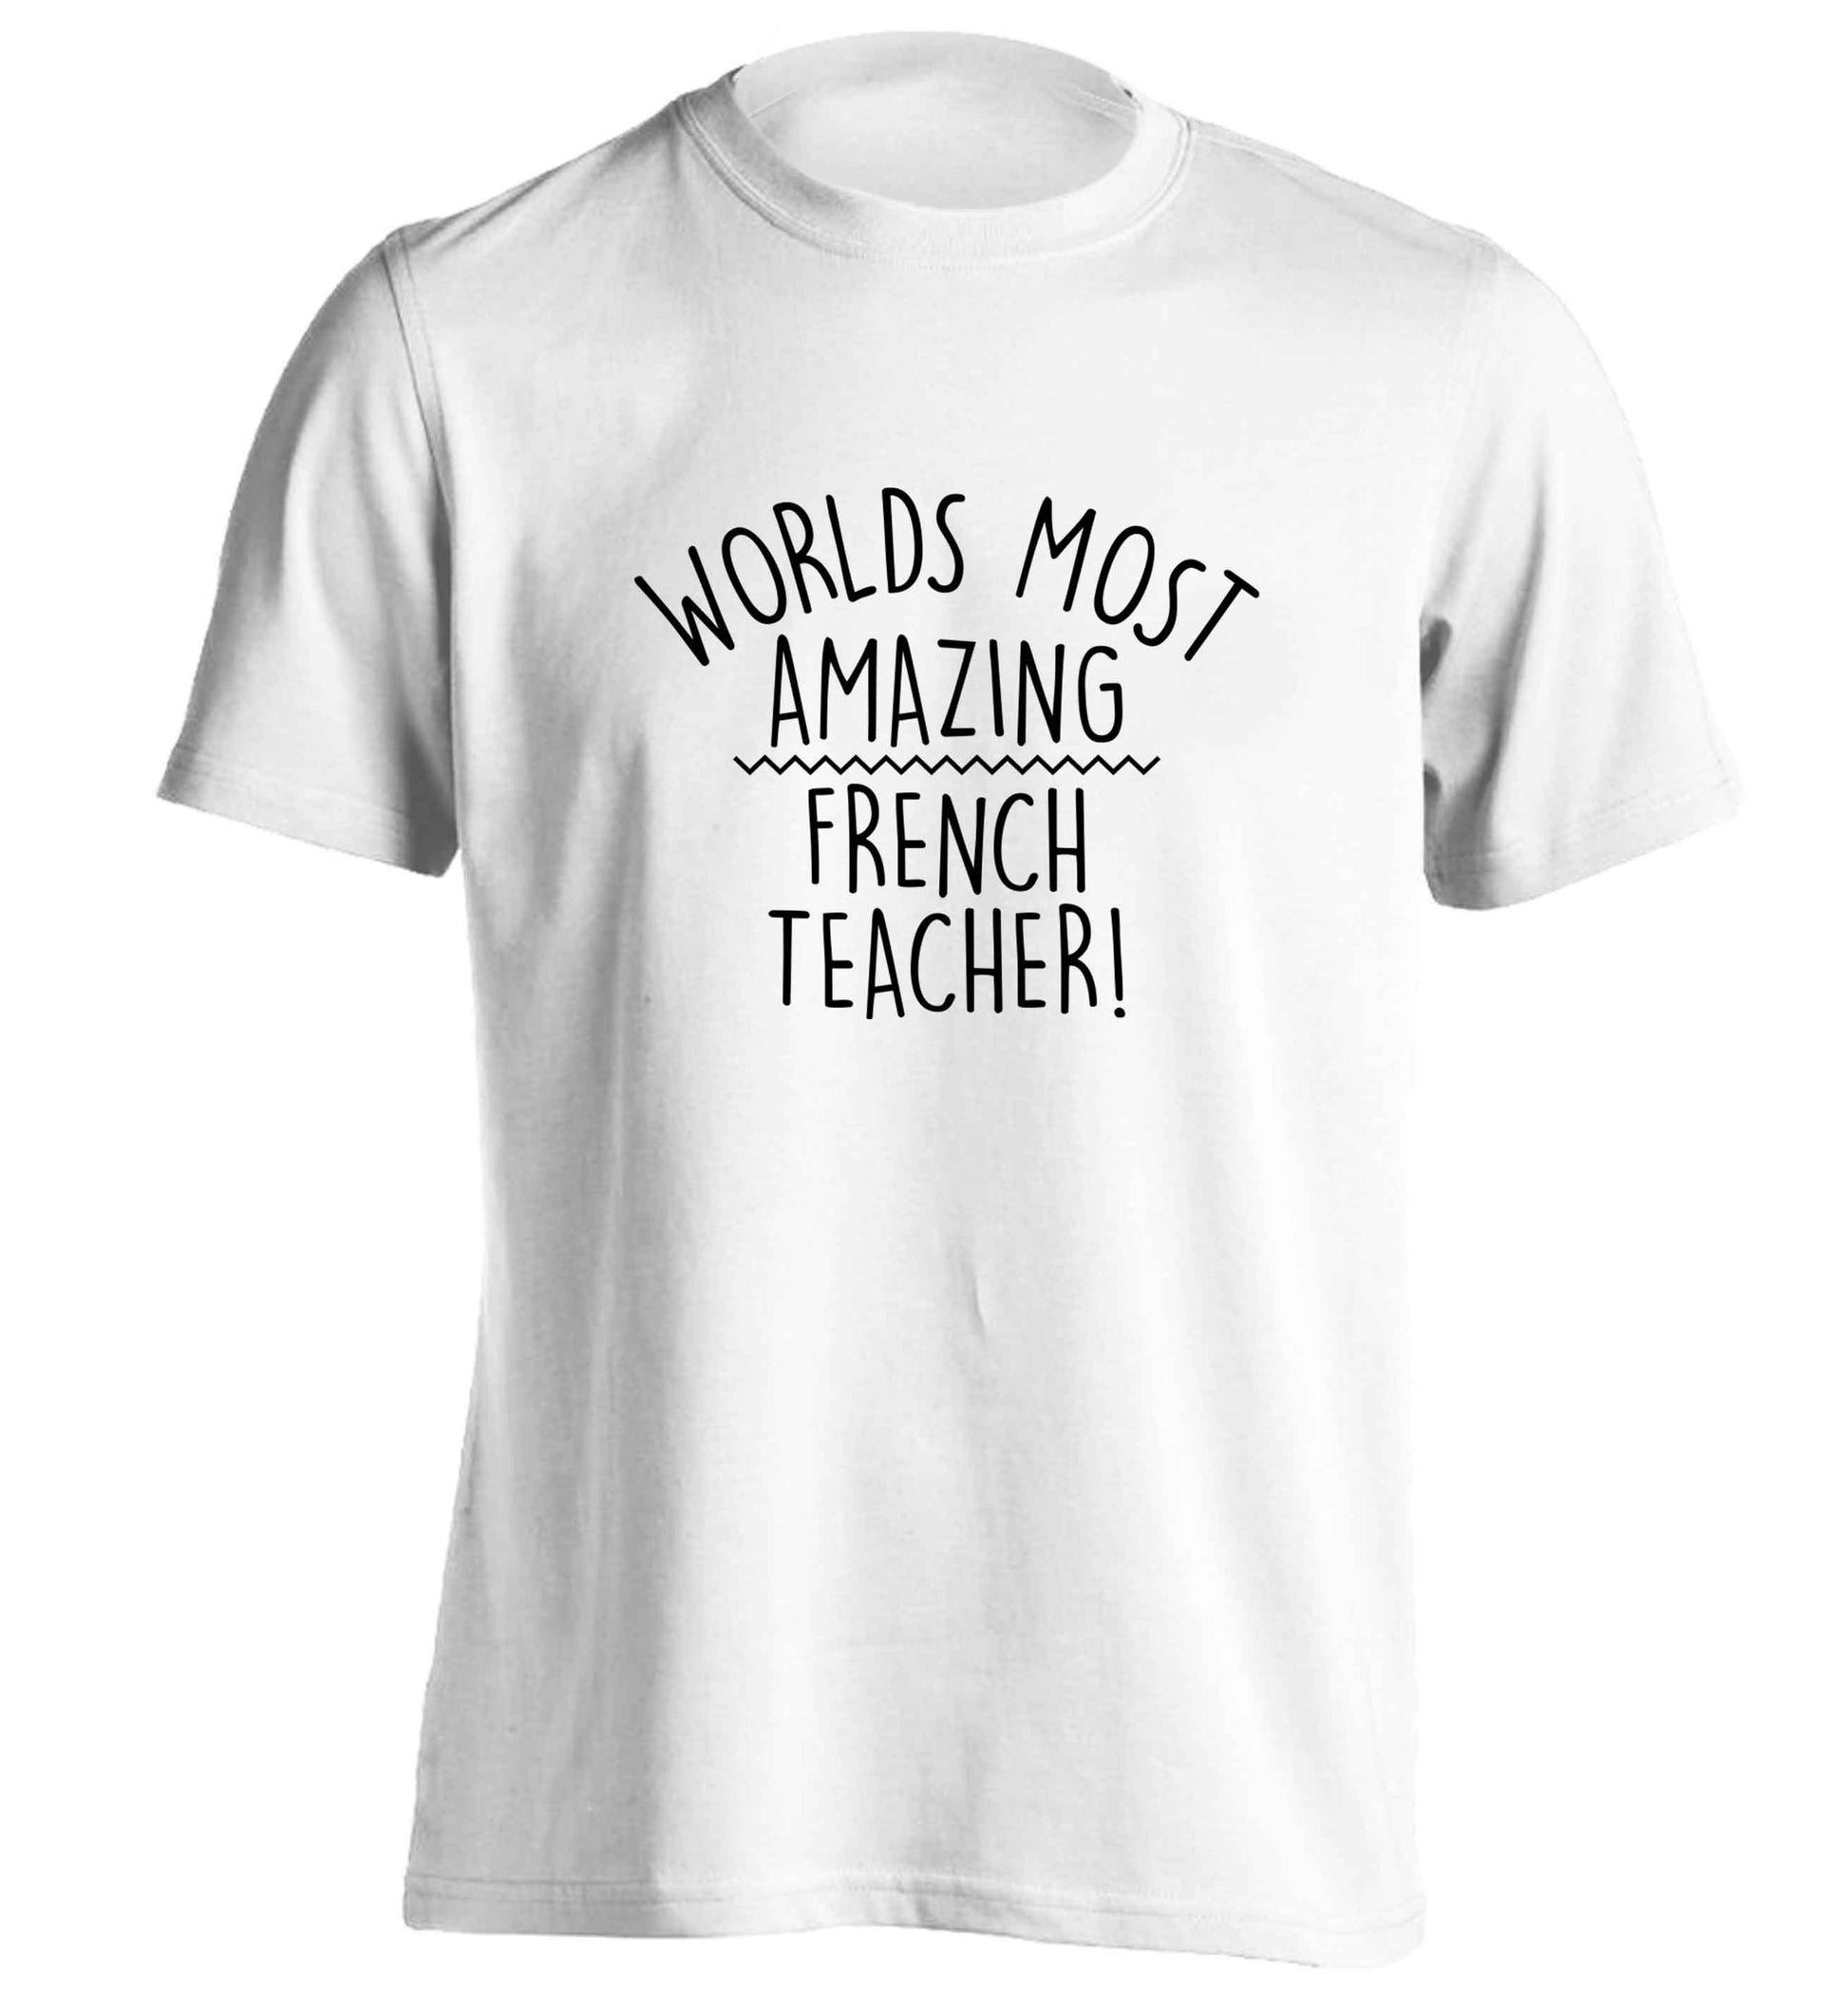 Worlds most amazing French teacher adults unisex white Tshirt 2XL